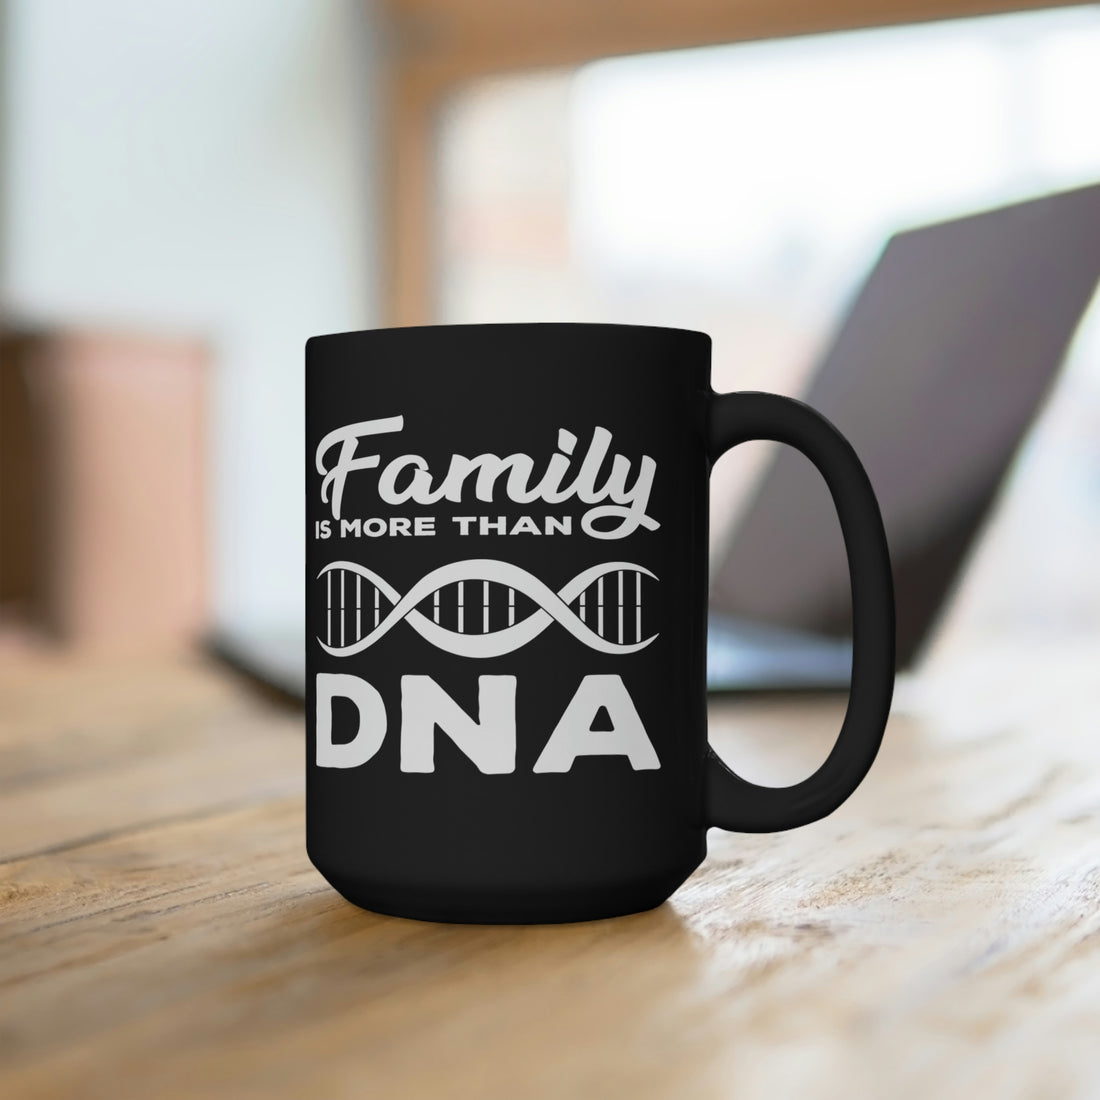 Family is more than DNA - Large 15oz Black Mug